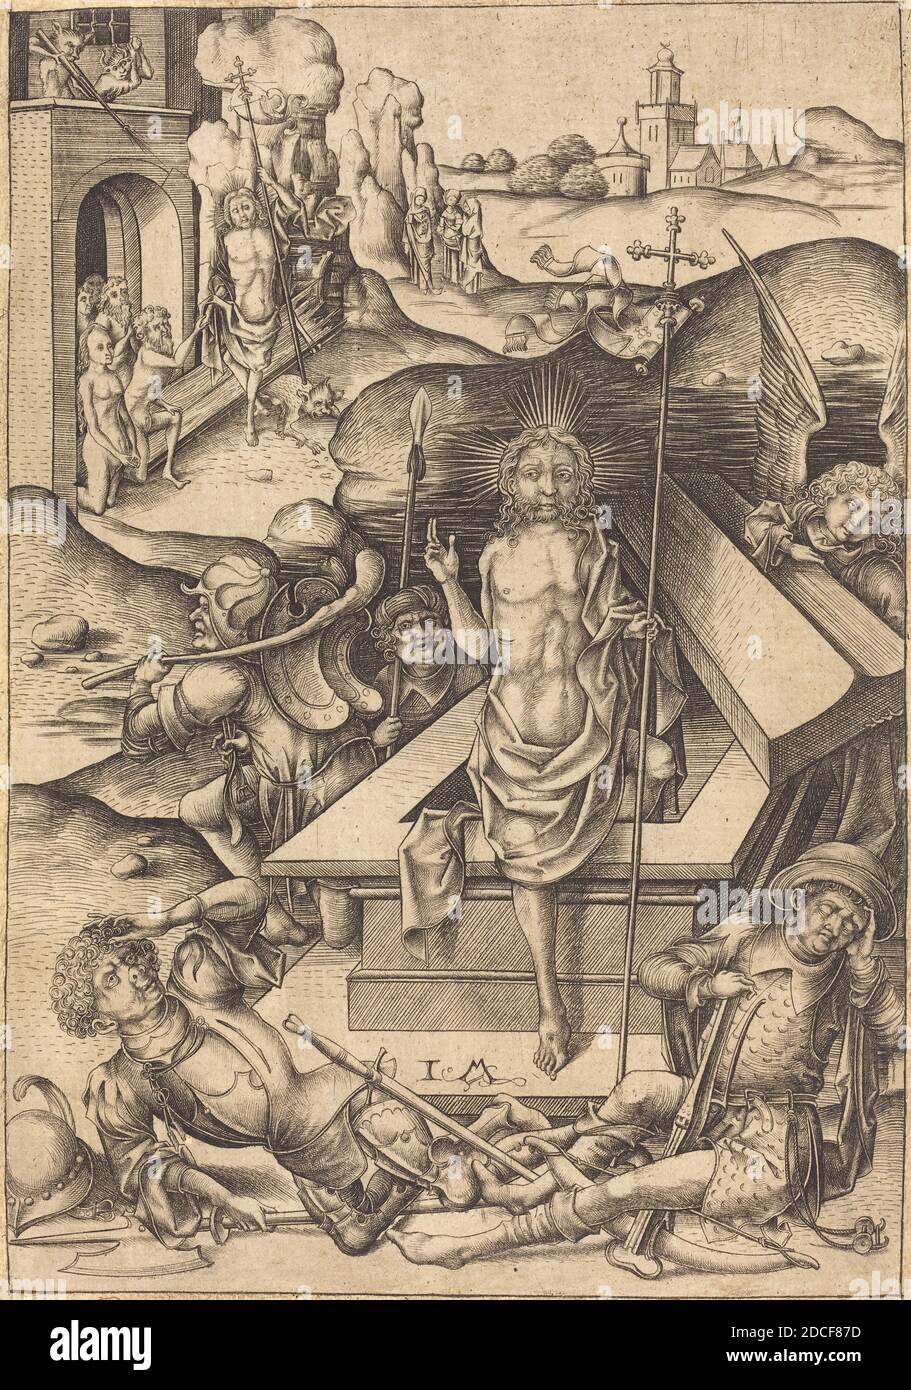 Israhel van Meckenem, (artist), German, c. 1445 - 1503, The Resurrection, Twelve Scenes of the Pasion, (series), c. 1480, engraving Stock Photo